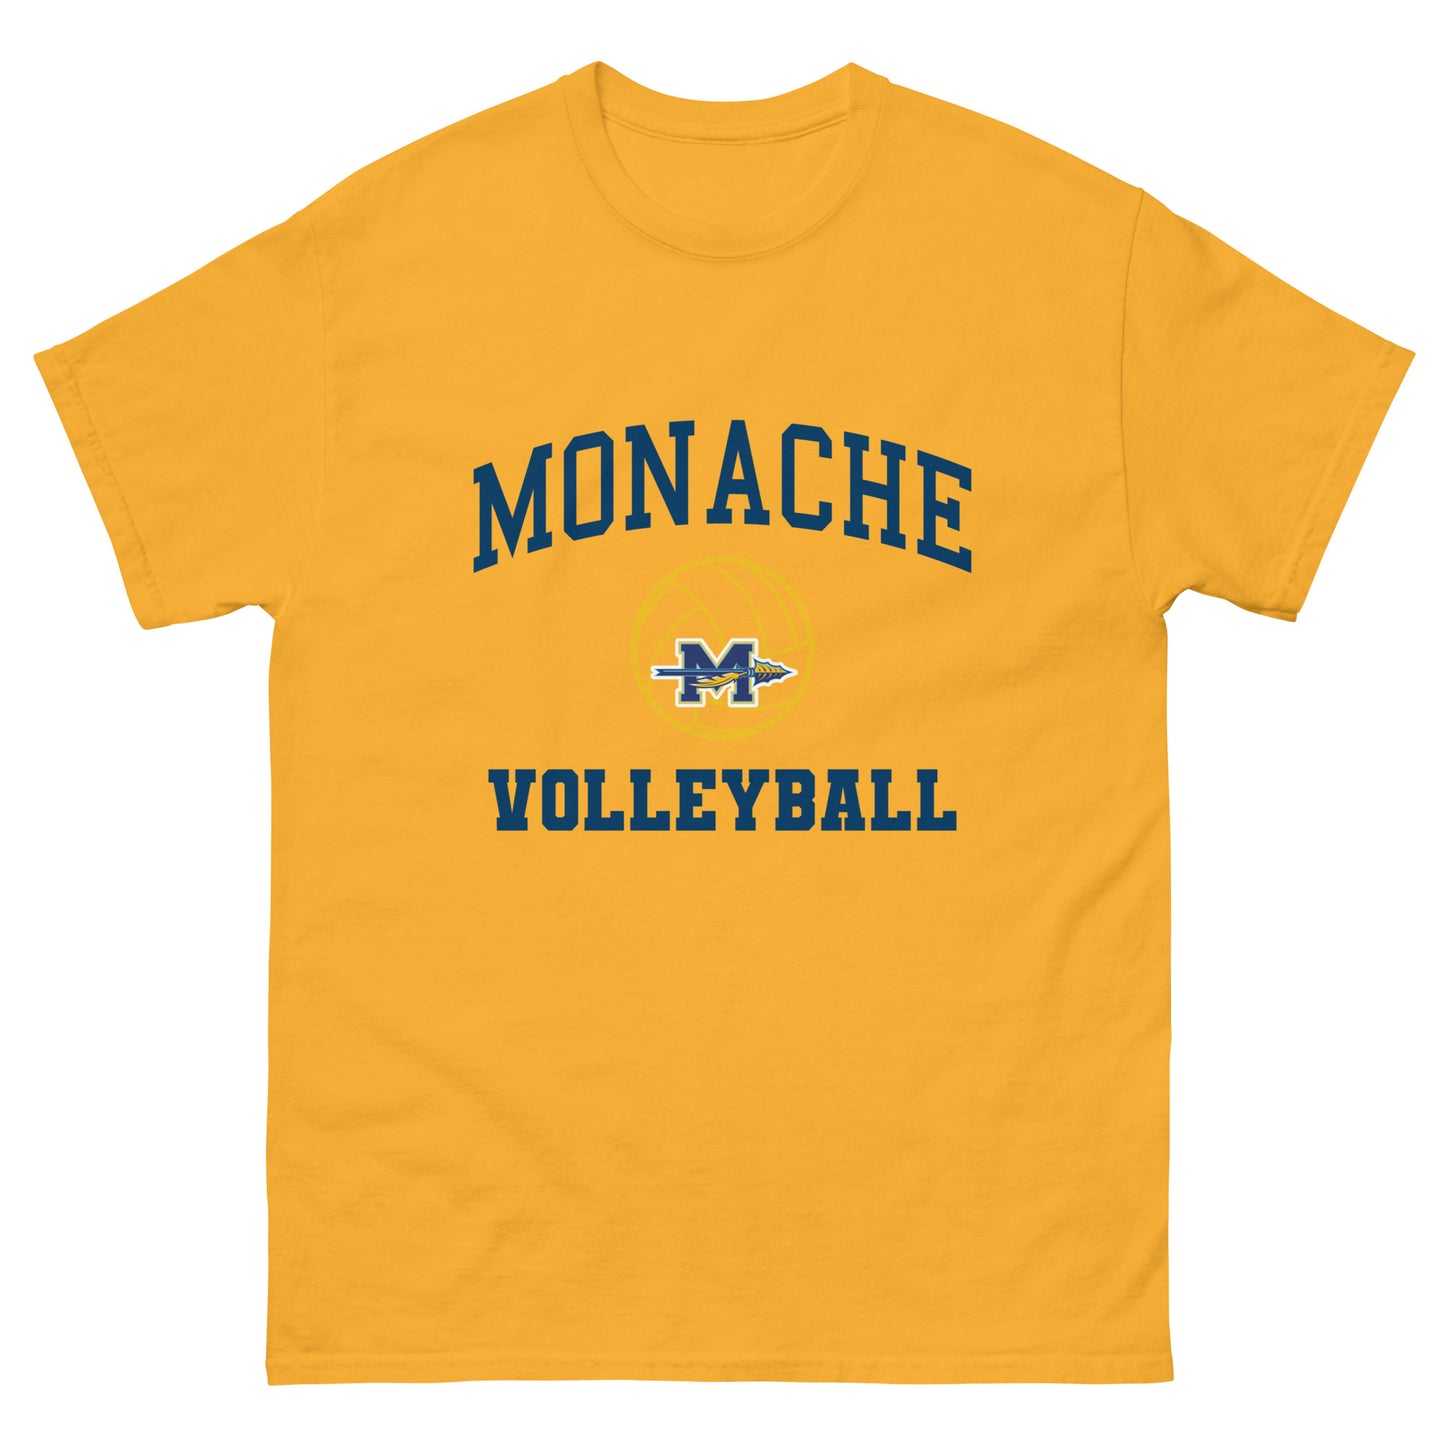 Monache Volleyball classic tee